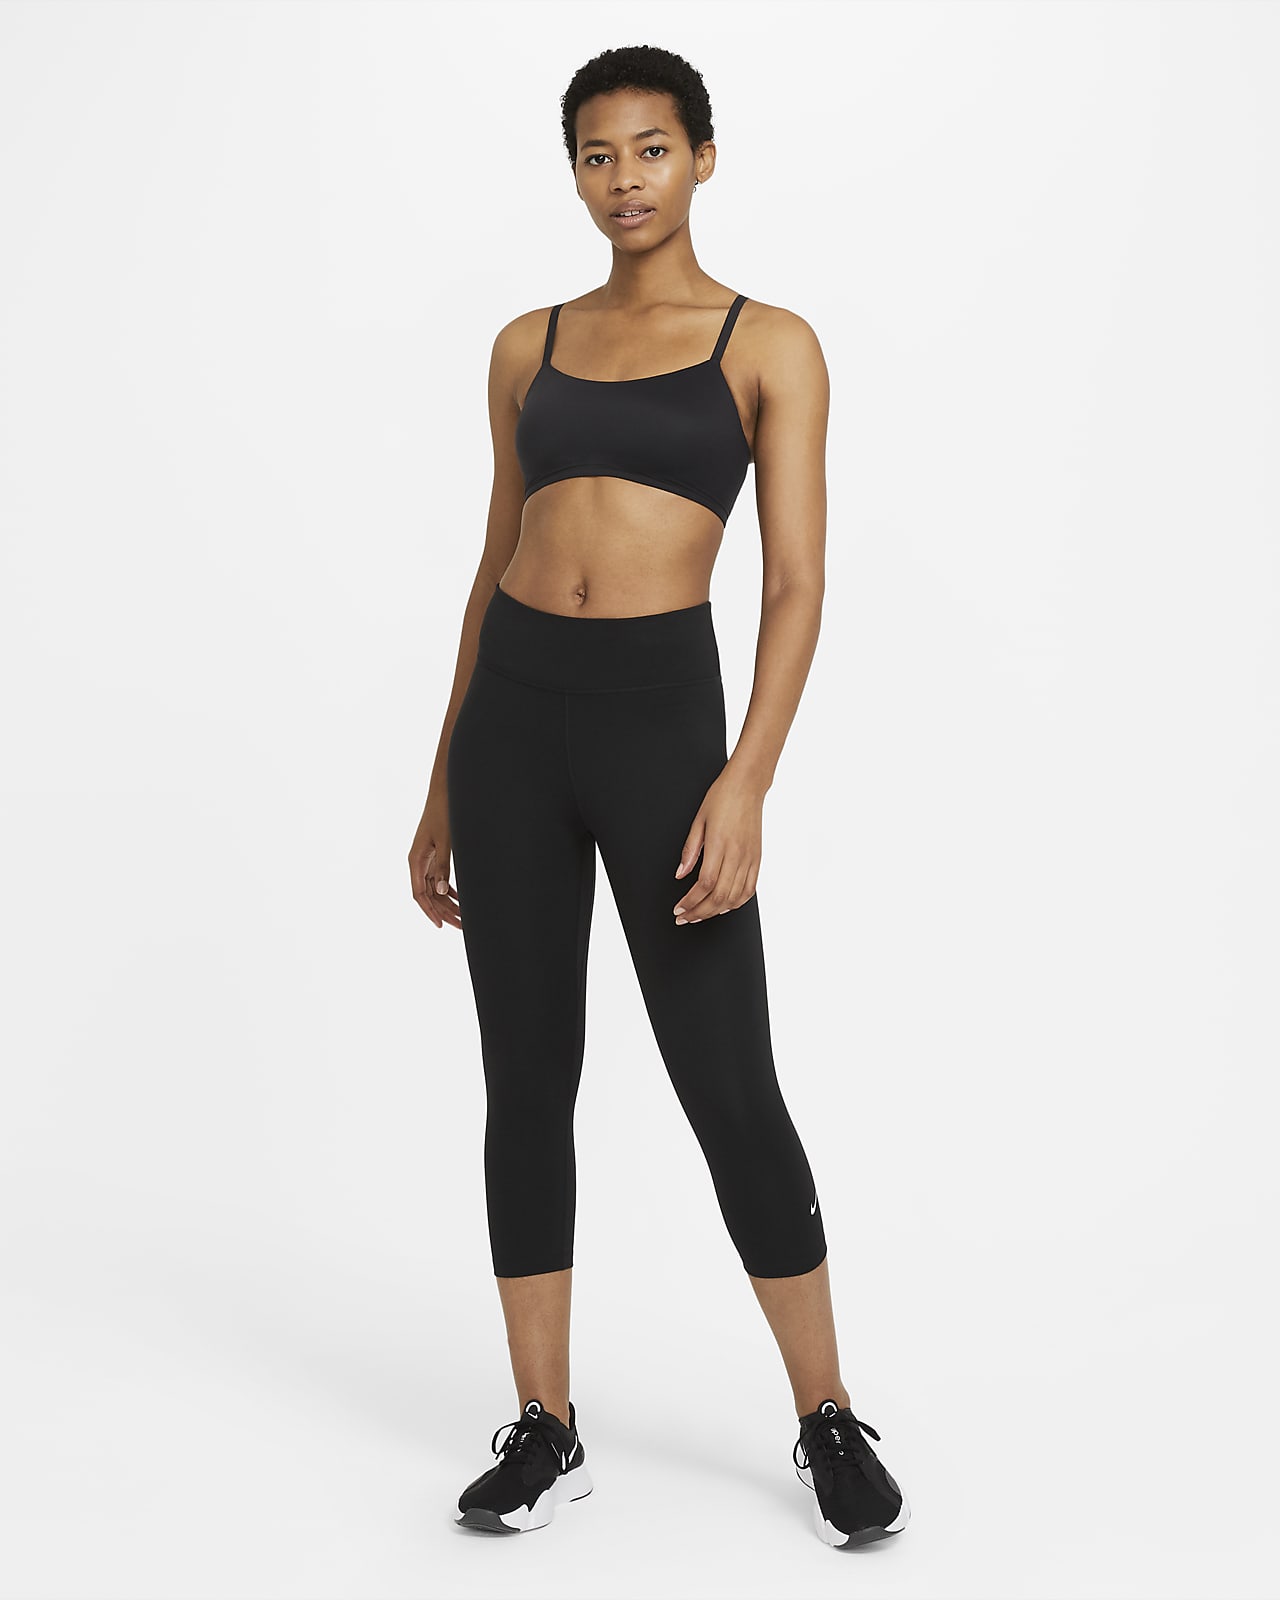 Nike Dri Fit Womens Medium Black Capri Capris Yoga Work Out